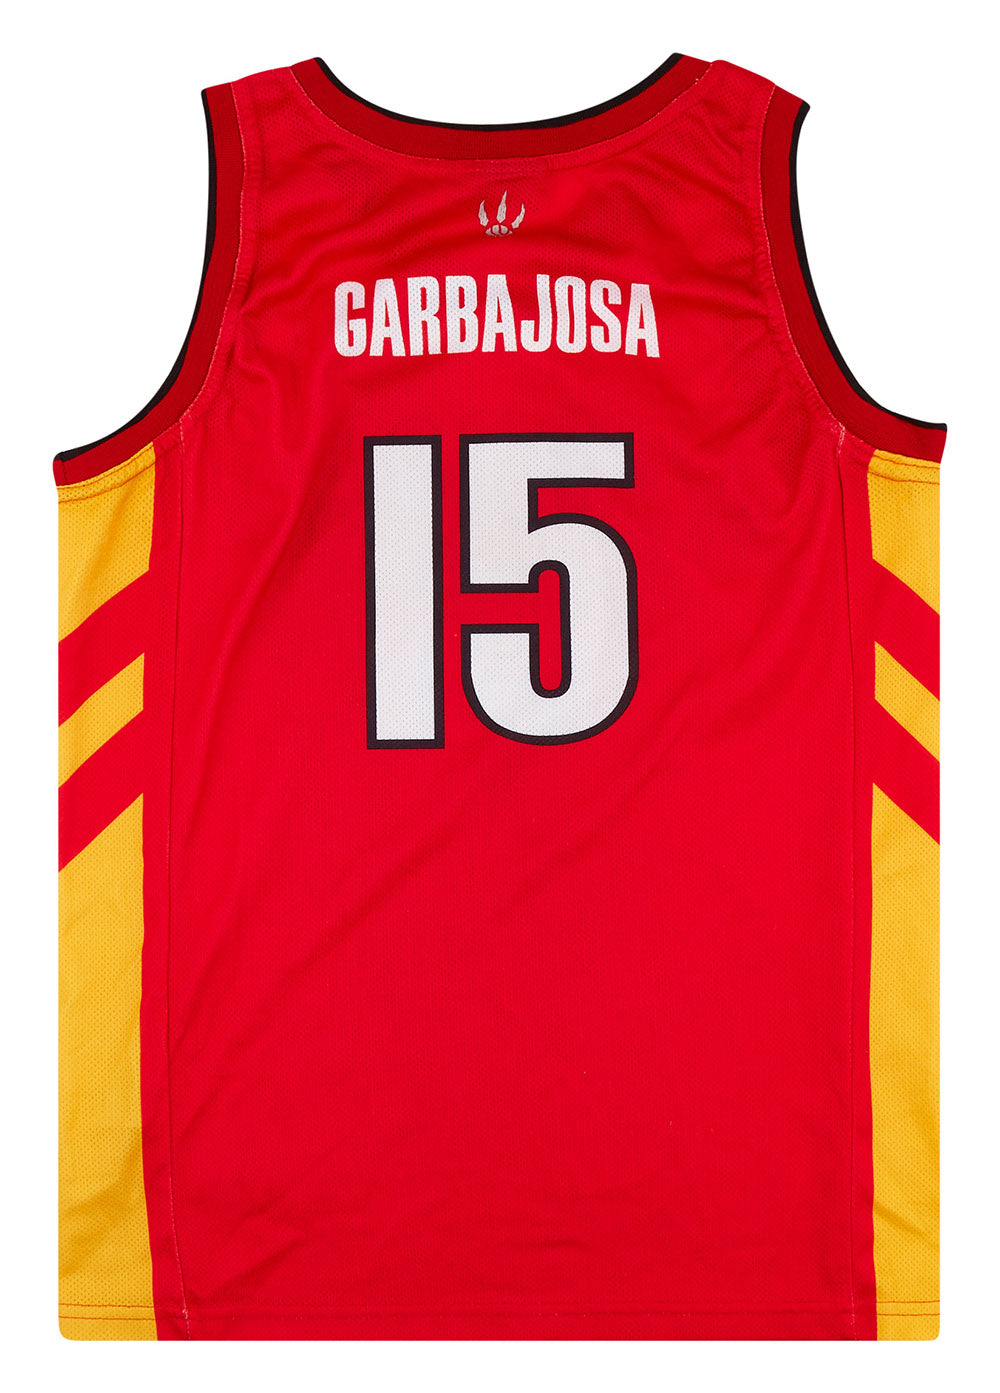 2007 TORONTO RAPTORS GARBAJOSA #15 CHAMPION NBA EUROPE LIVE TOUR JERSEY (ALTERNATE) M